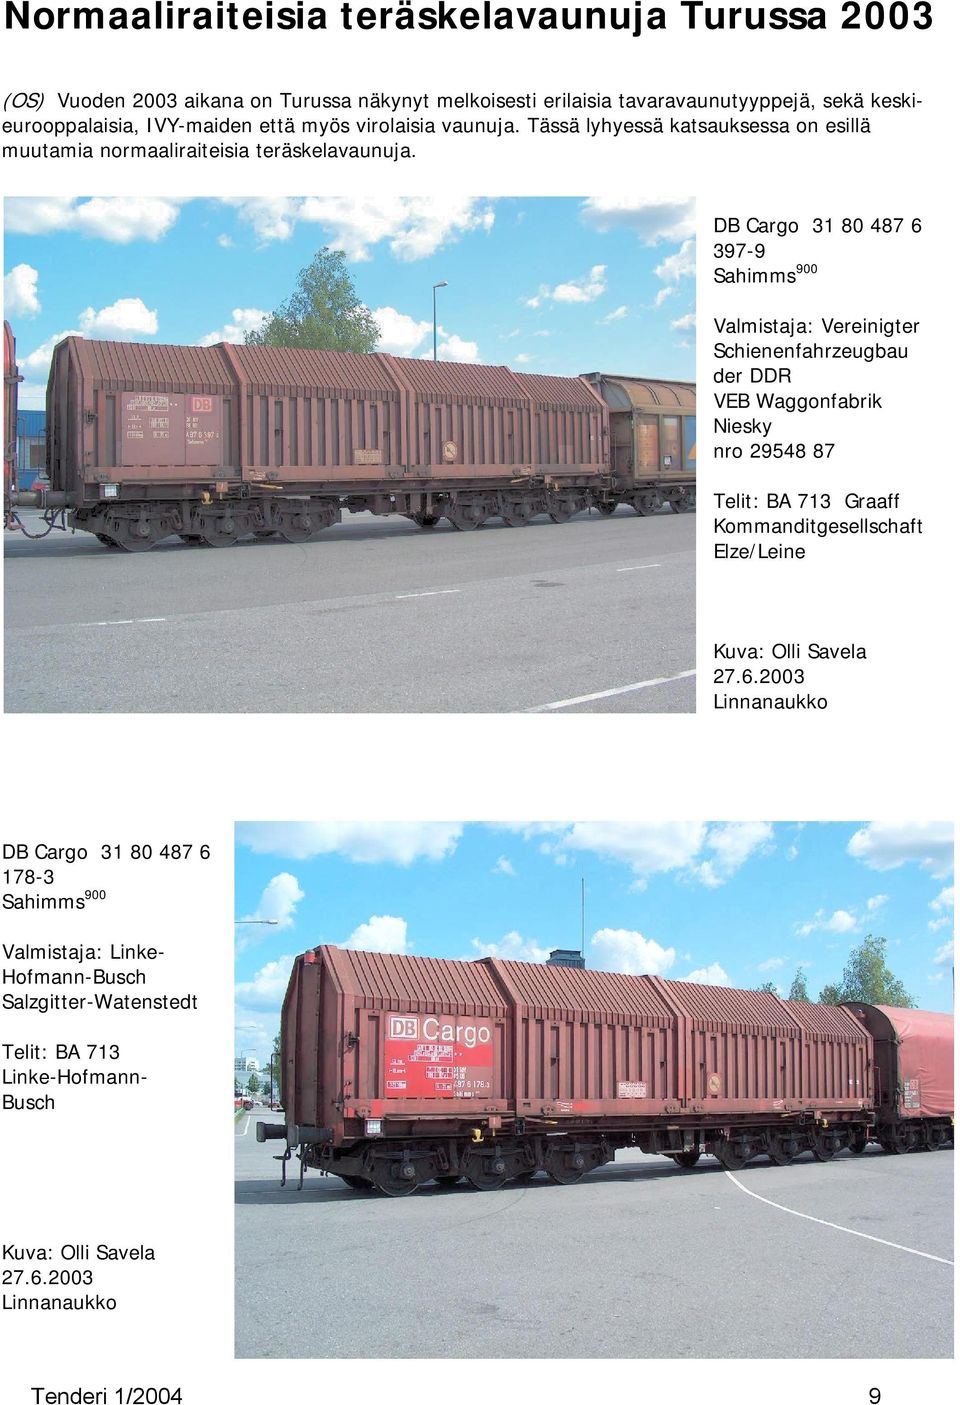 DB Cargo 31 80 487 6 397-9 Sahimms 900 Valmistaja: Vereinigter Schienenfahrzeugbau der DDR VEB Waggonfabrik Niesky nro 29548 87 Telit: BA 713 Graaff Kommanditgesellschaft